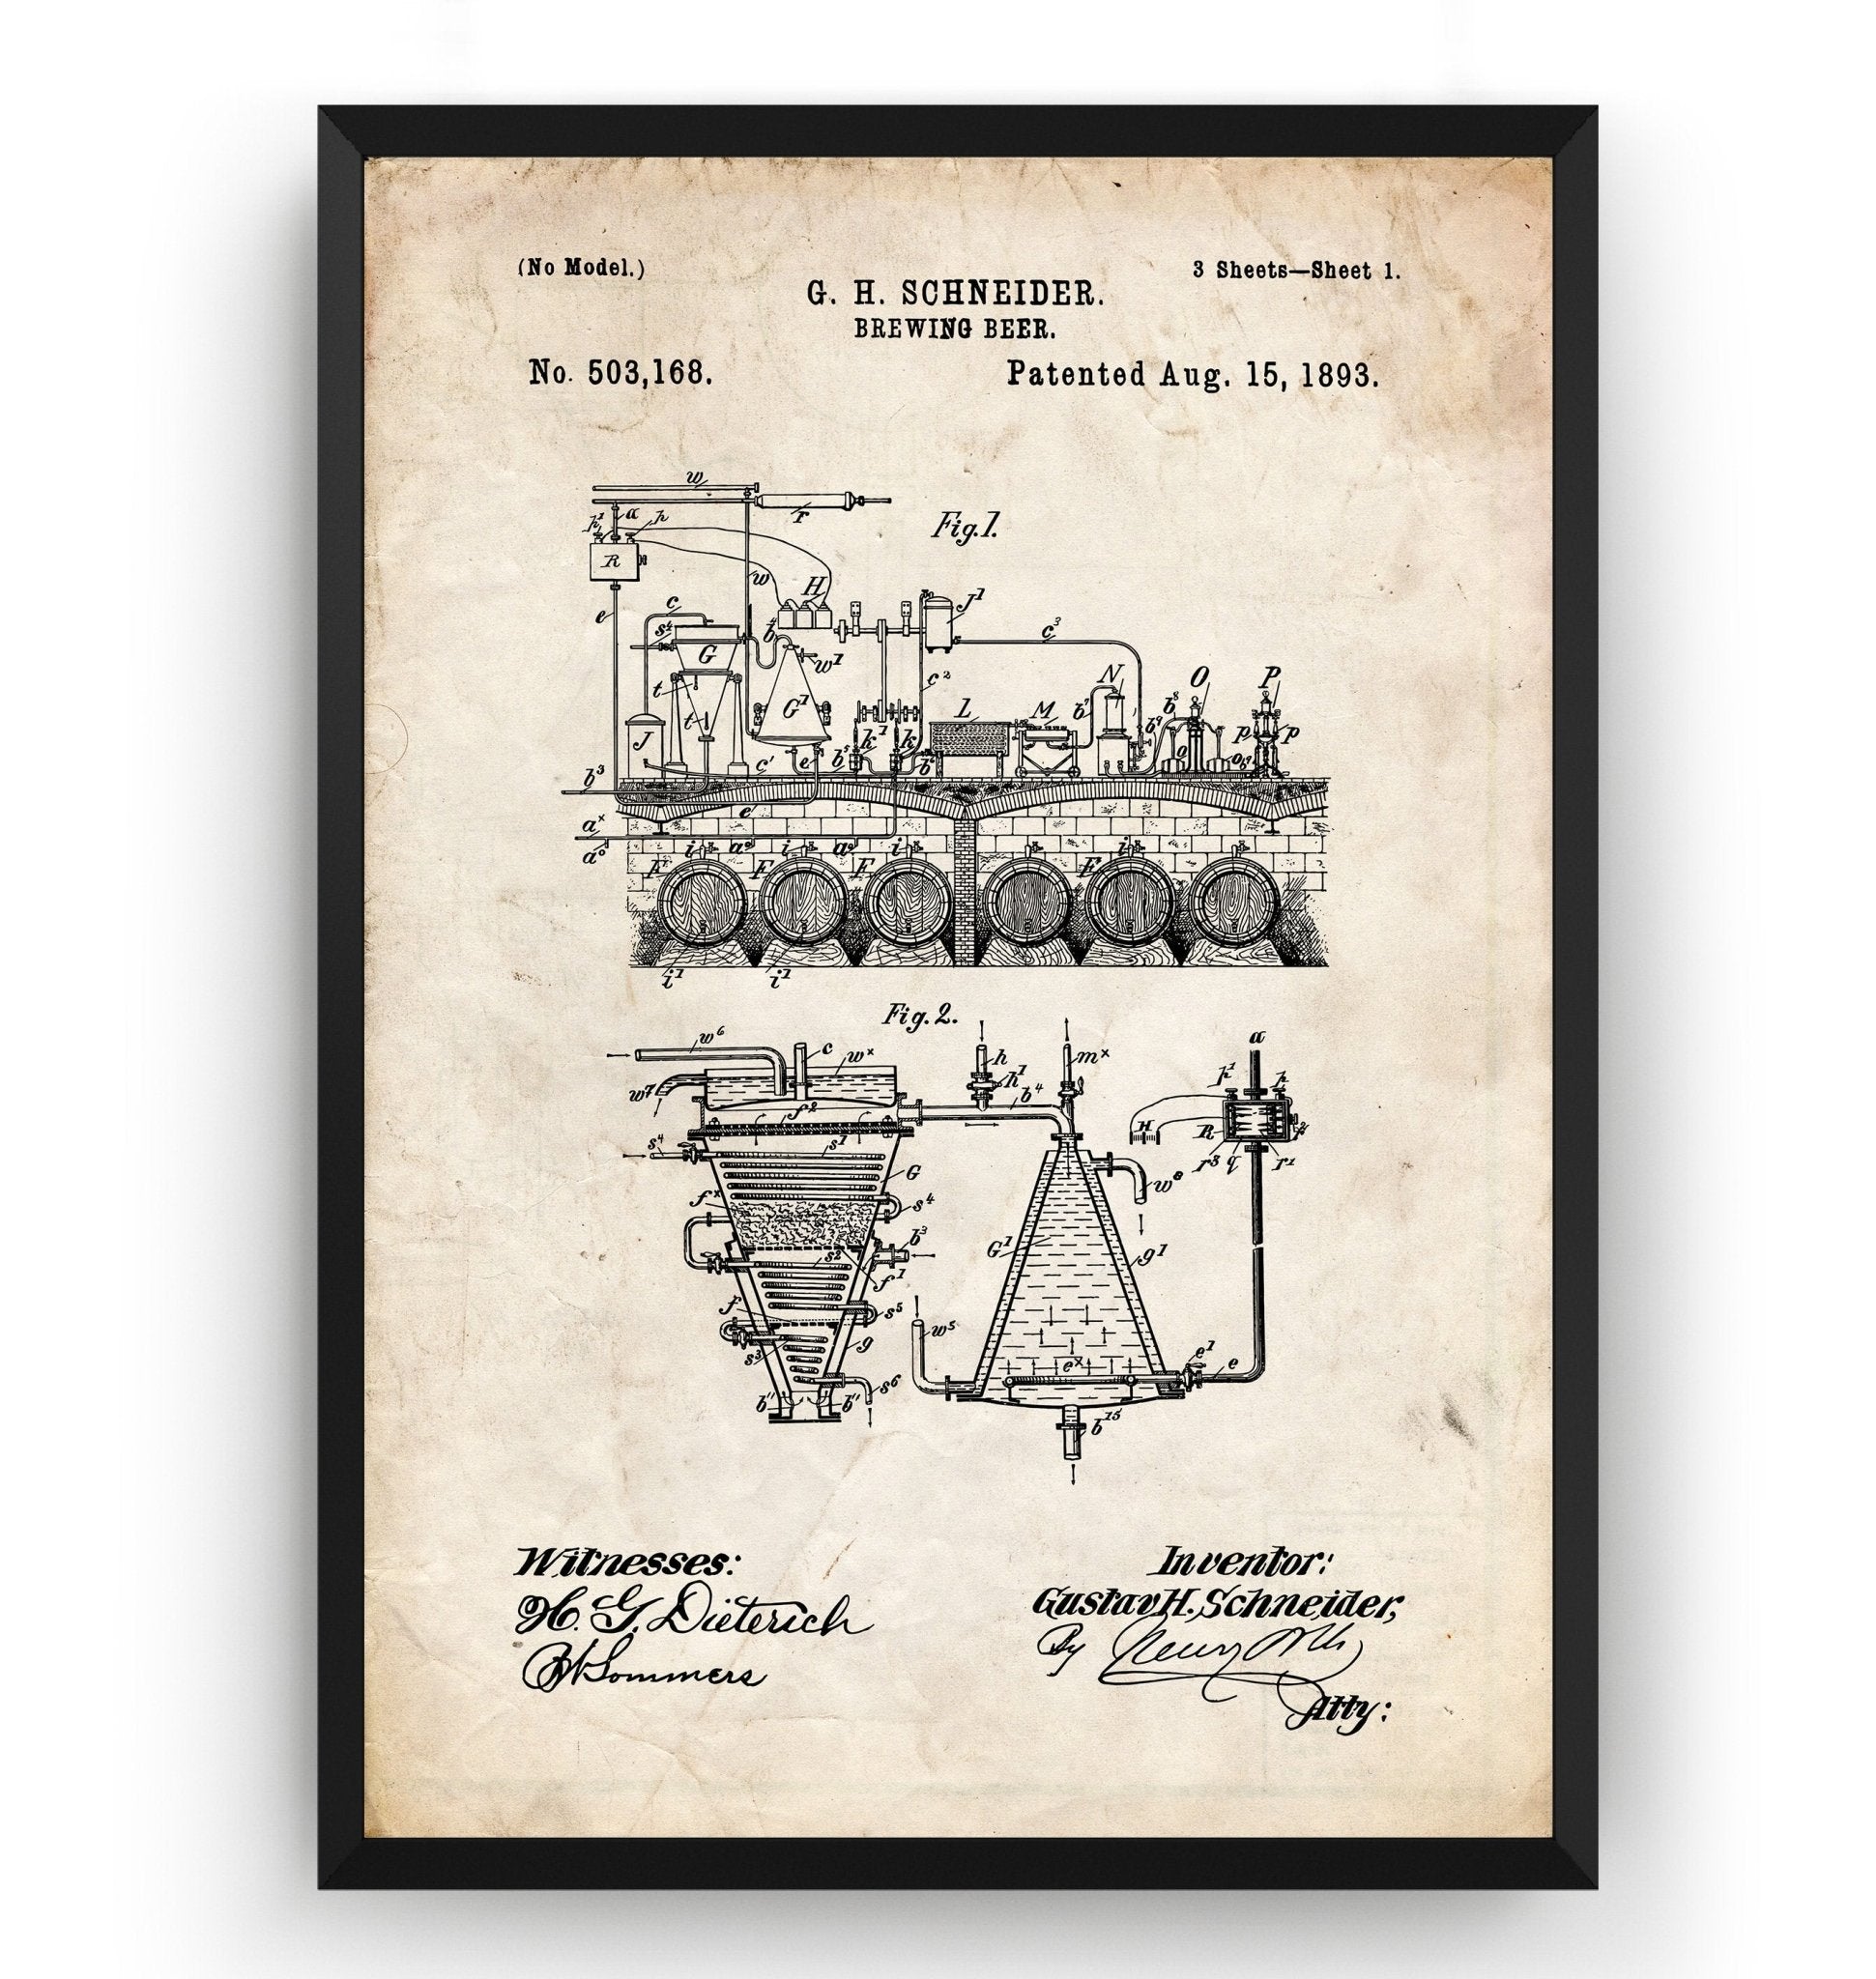 Brewing Beer Patent Print - Magic Posters